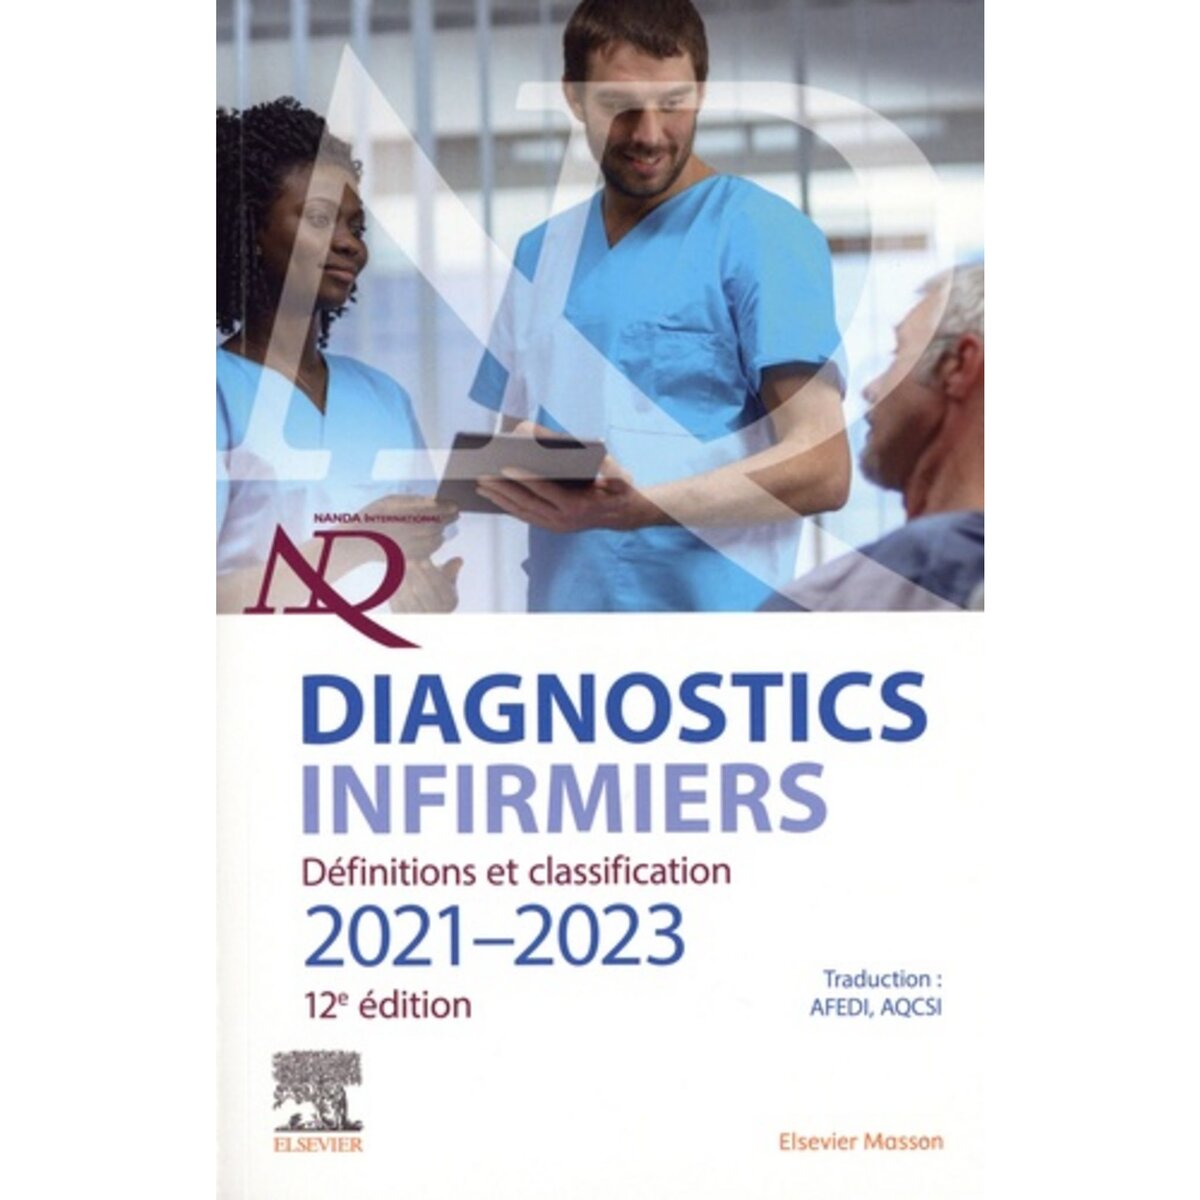  DIAGNOSTICS INFIRMIERS. DEFINITIONS ET CLASSIFICATION. EDITION 2021-2023, Nanda International